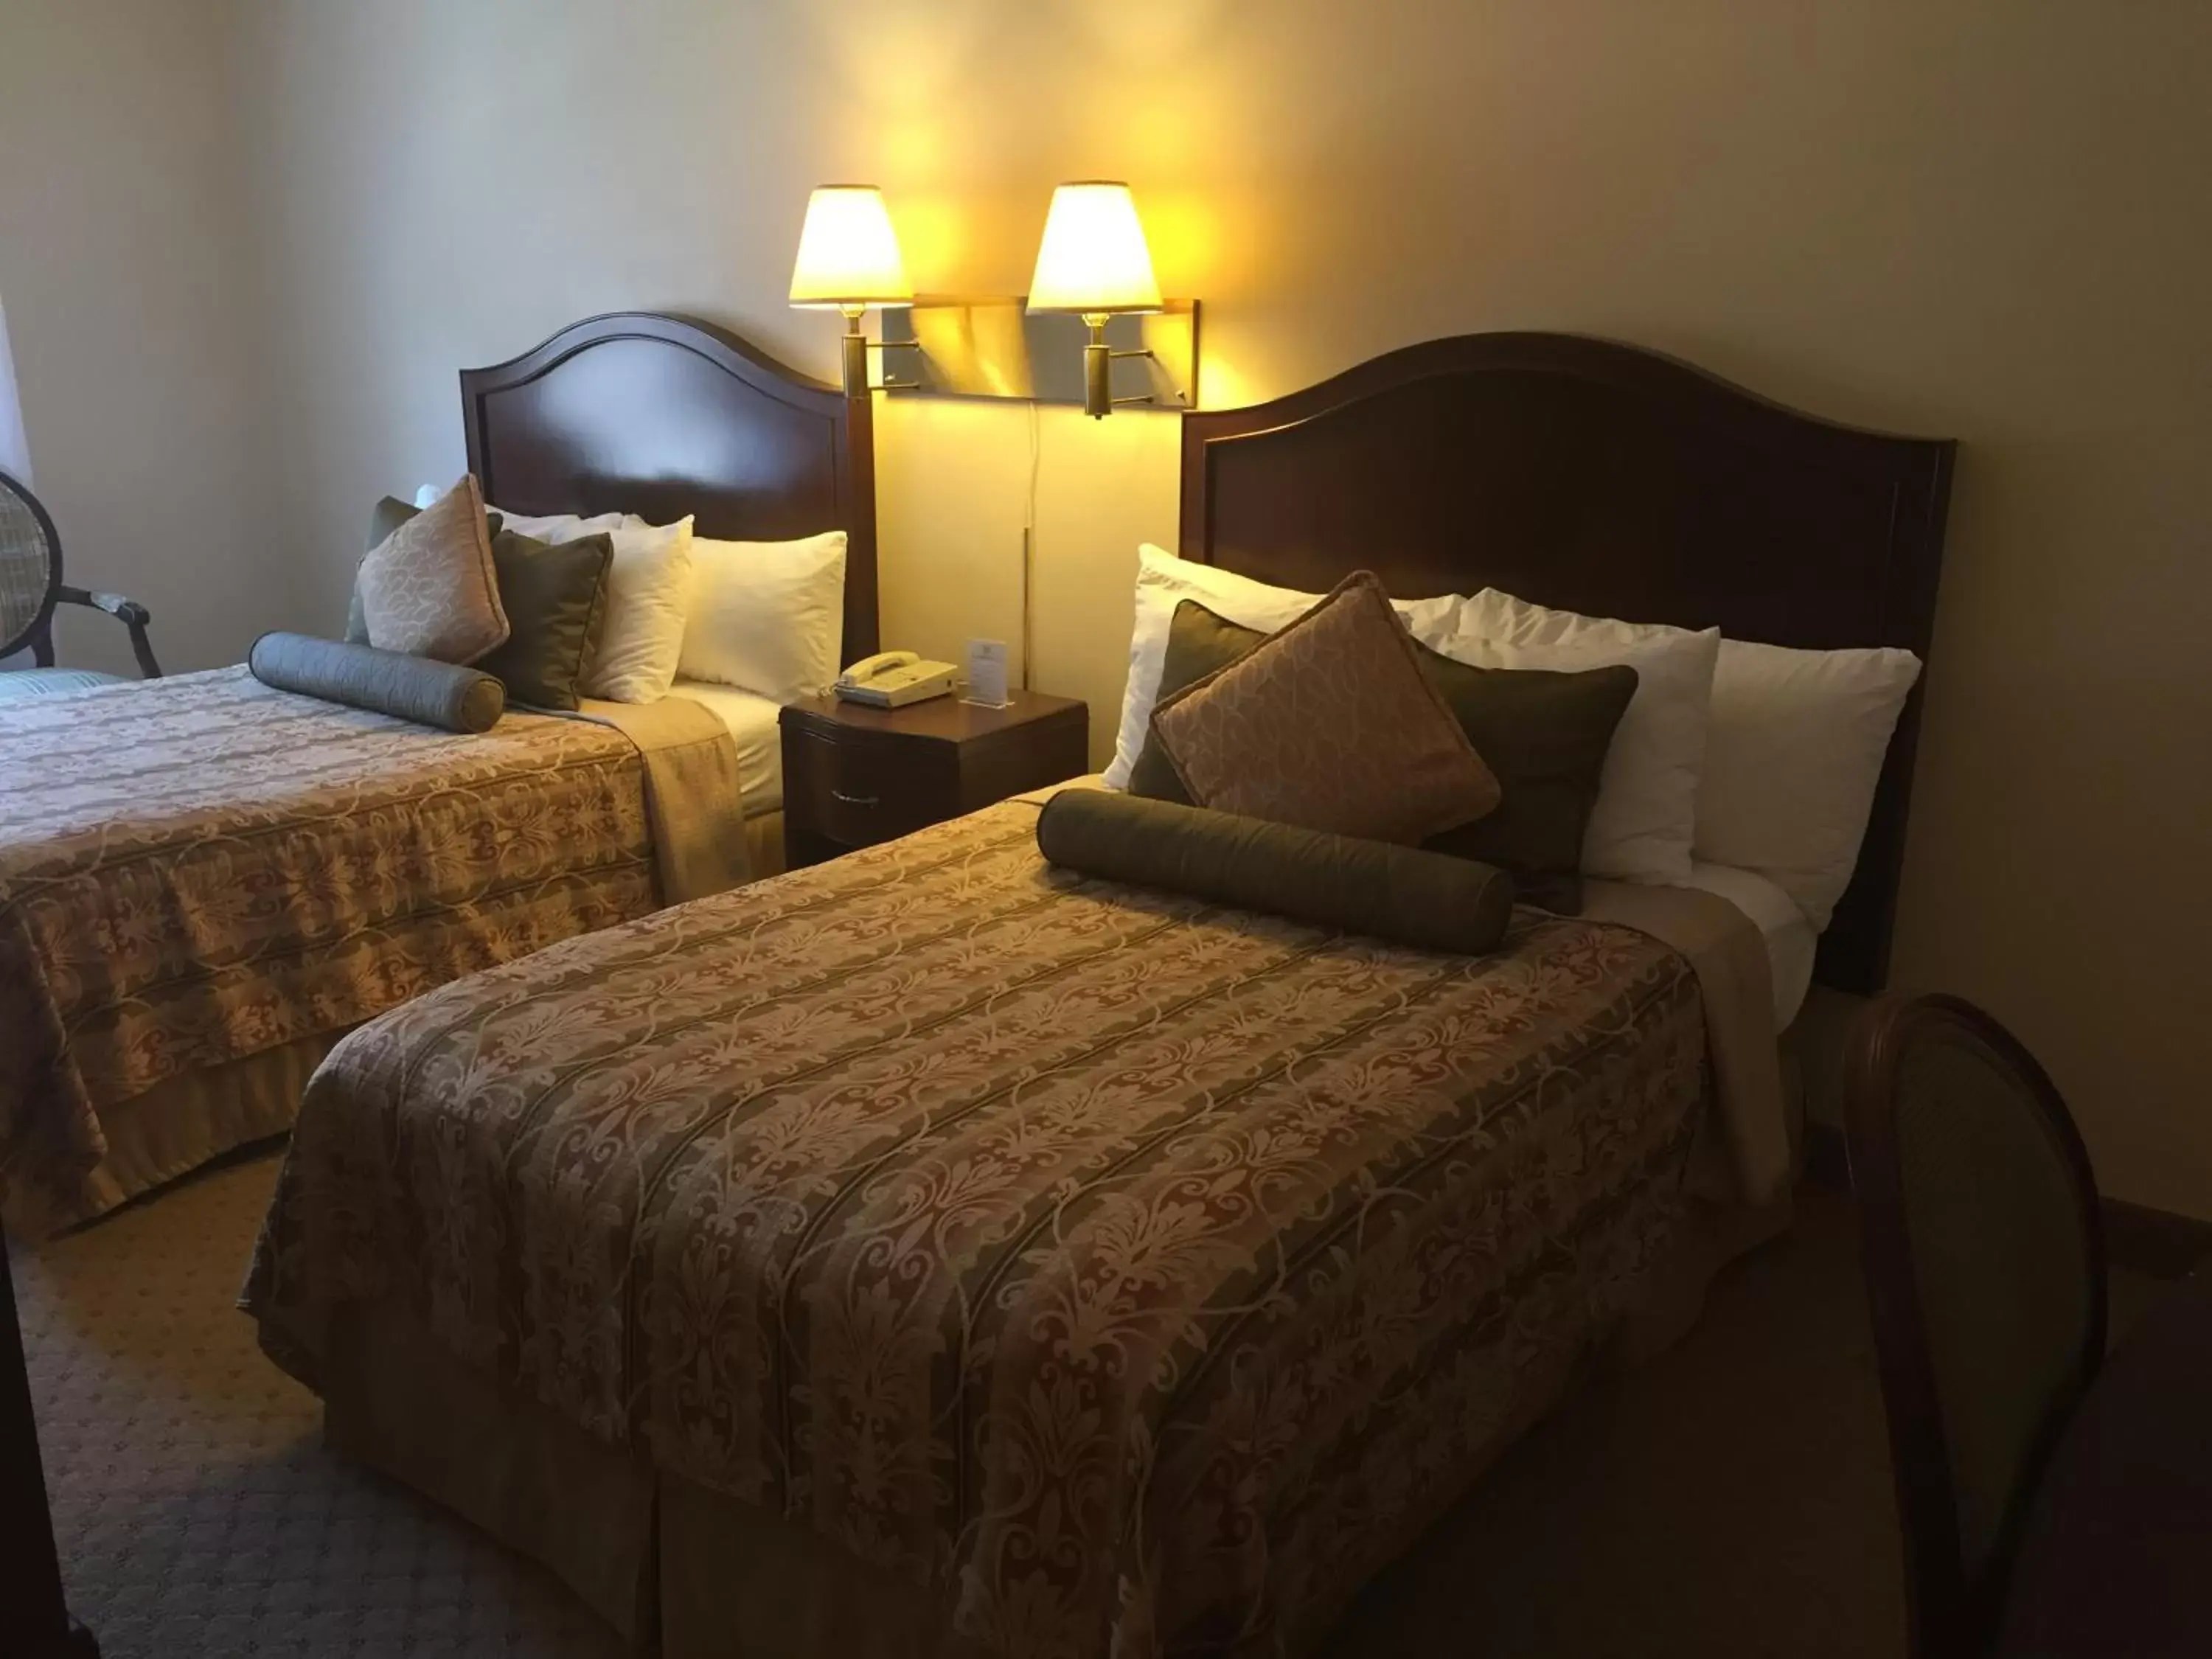 Bed, Room Photo in Hotel Amari